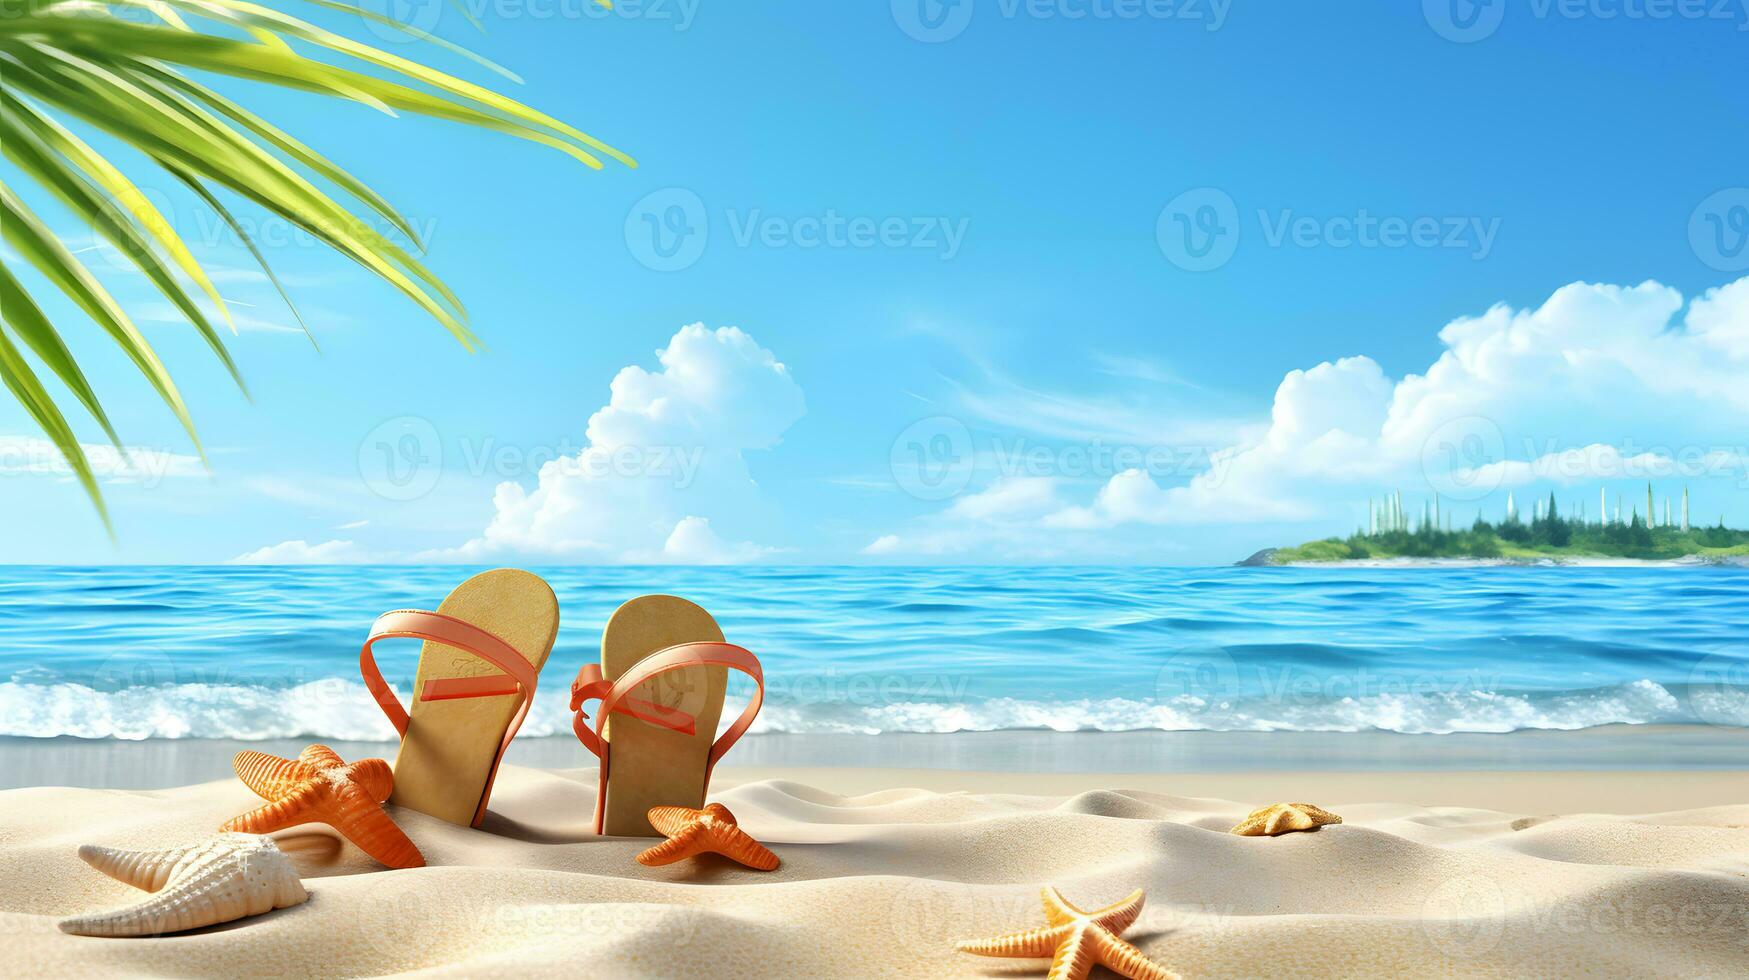 Beach scene with sandals and starfish photo